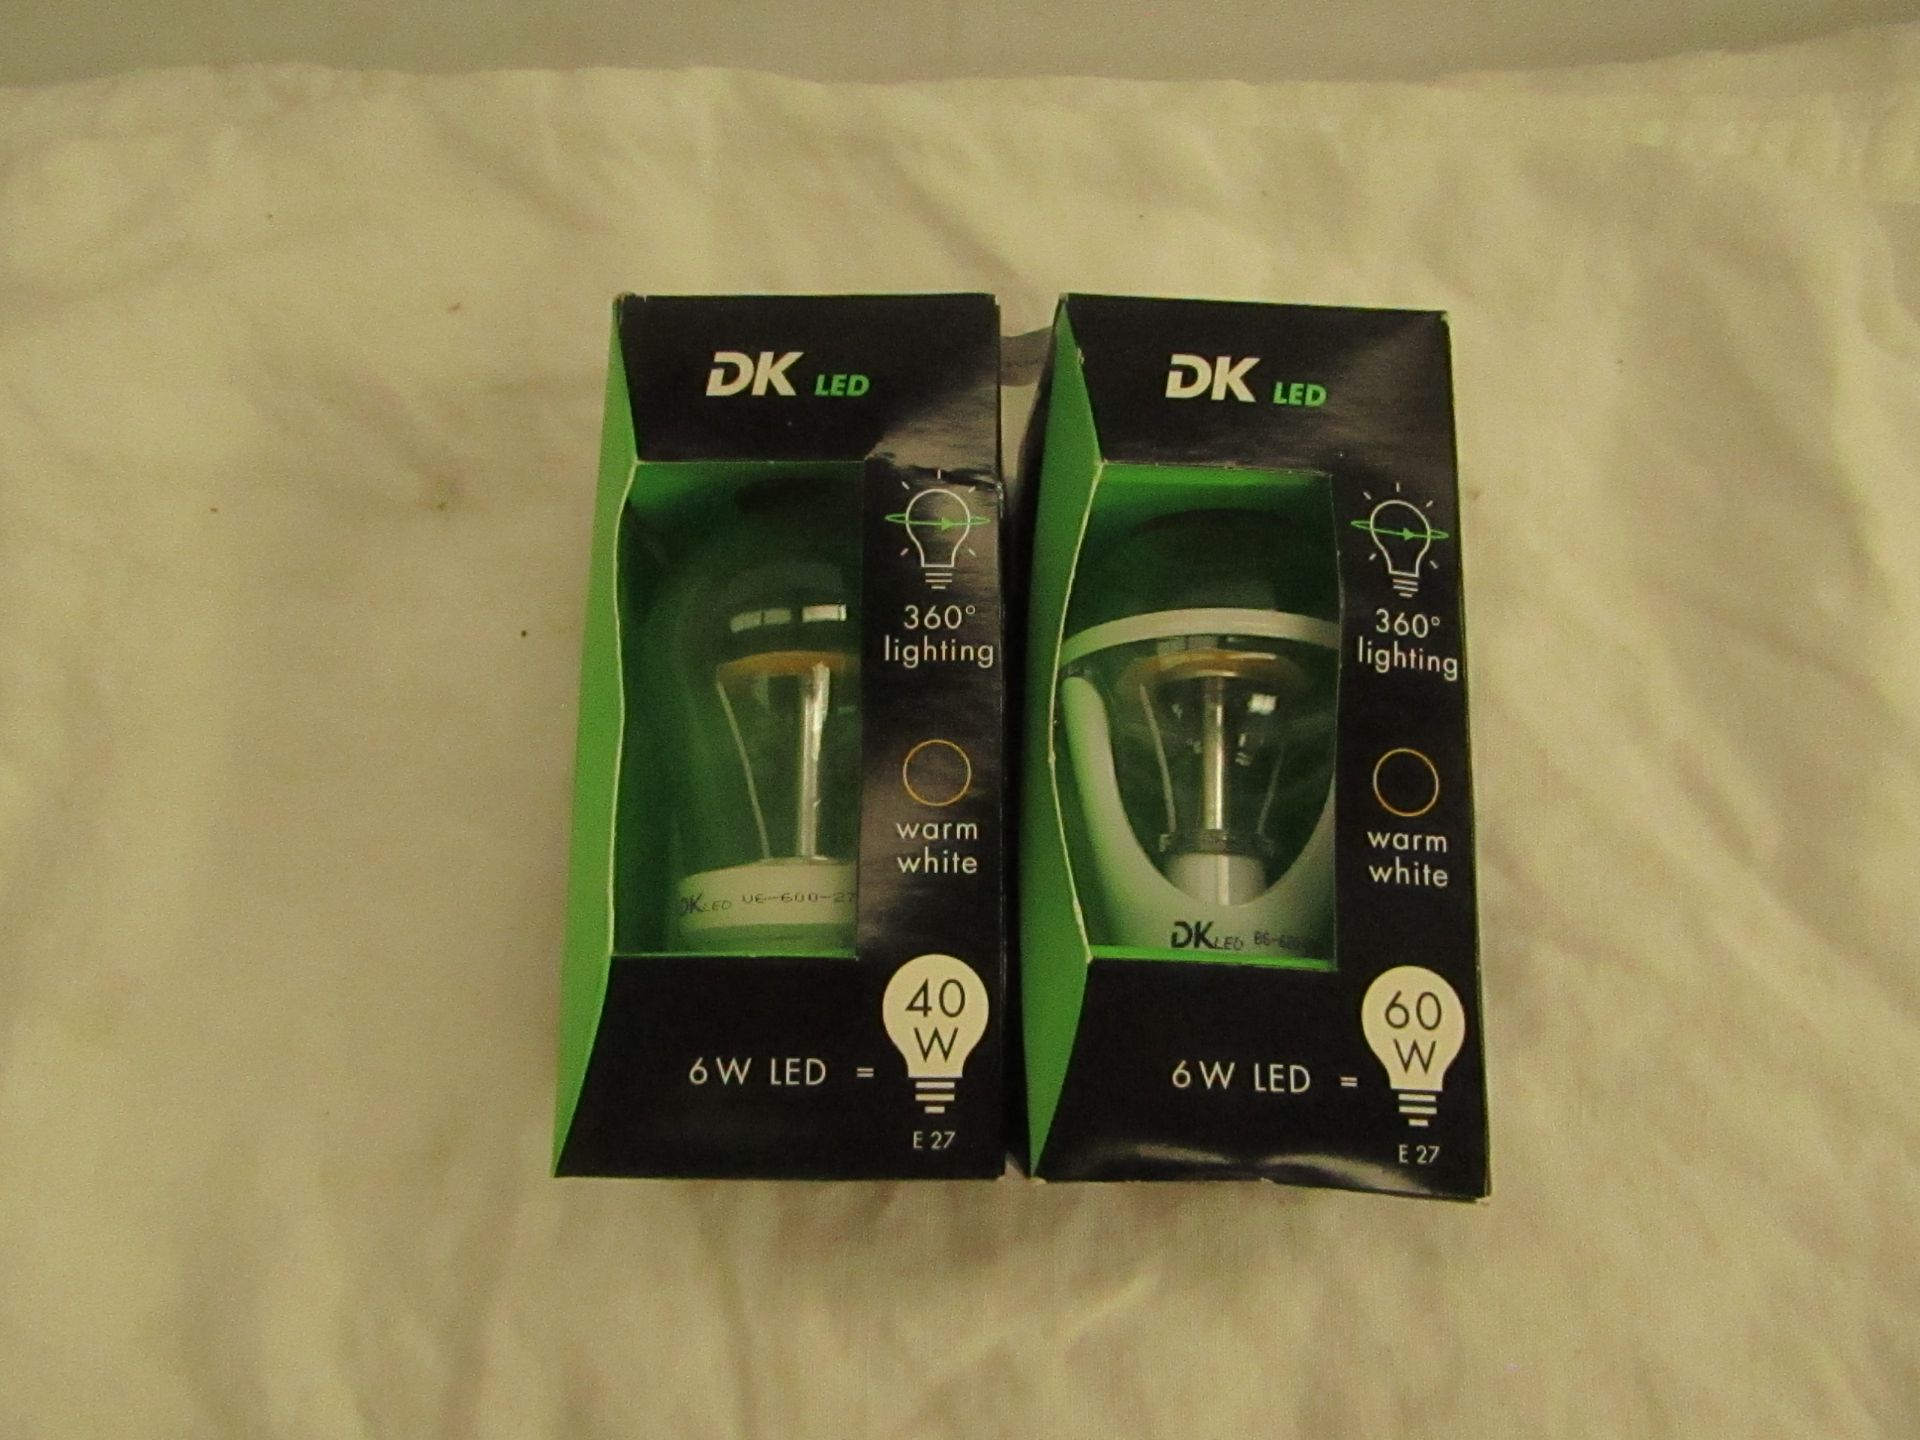 2x DK LED - Warm White 6W LED E27 Light Bulb - Untested & Boxed.